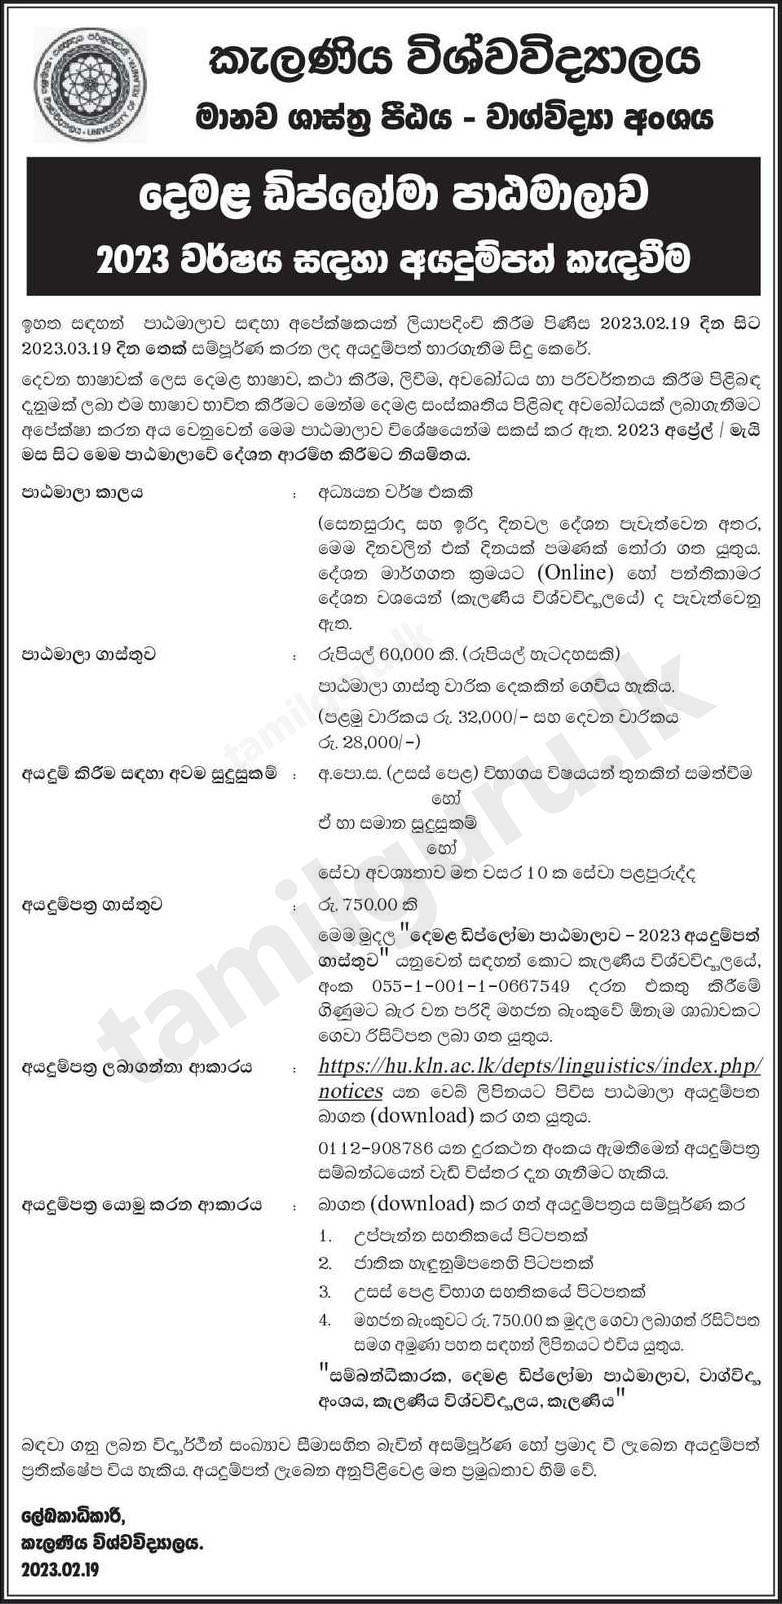 Calling Applications for Diploma Course in Tamil Language (දෙමළ ඩිප්ලෝමා පාඨමාලාව) 2023 Intake - University of Kelaniya